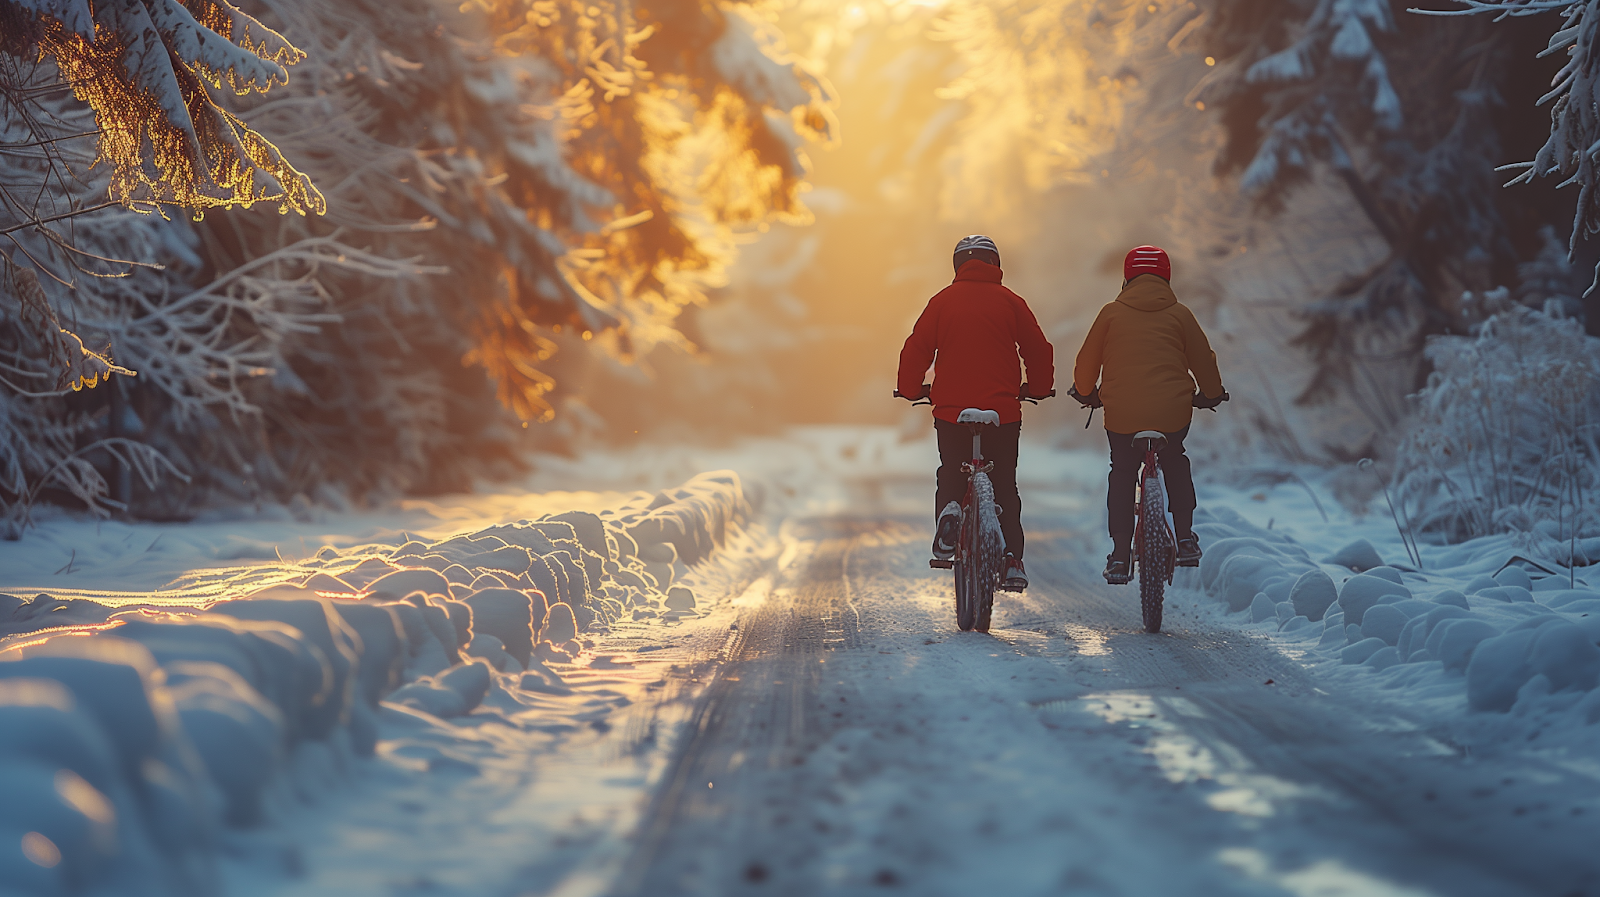 A couple biking along a snowy path